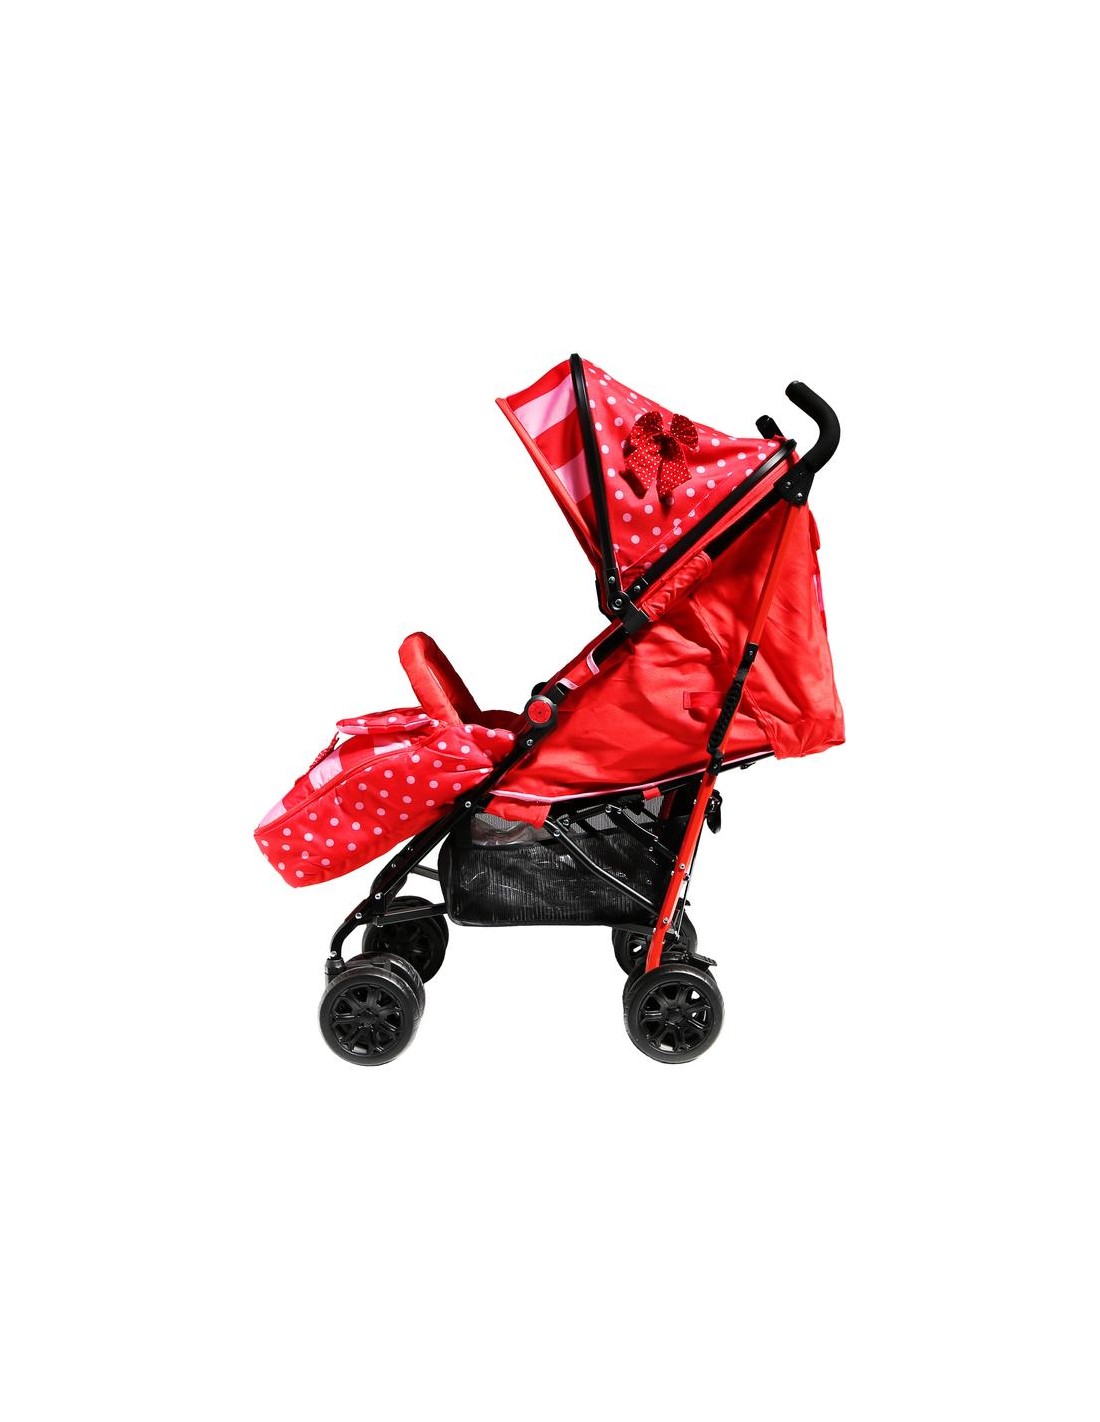 Parent Console Changing Bag 2018 iSafe OPTIMUM Stroller BOW Dots Design 